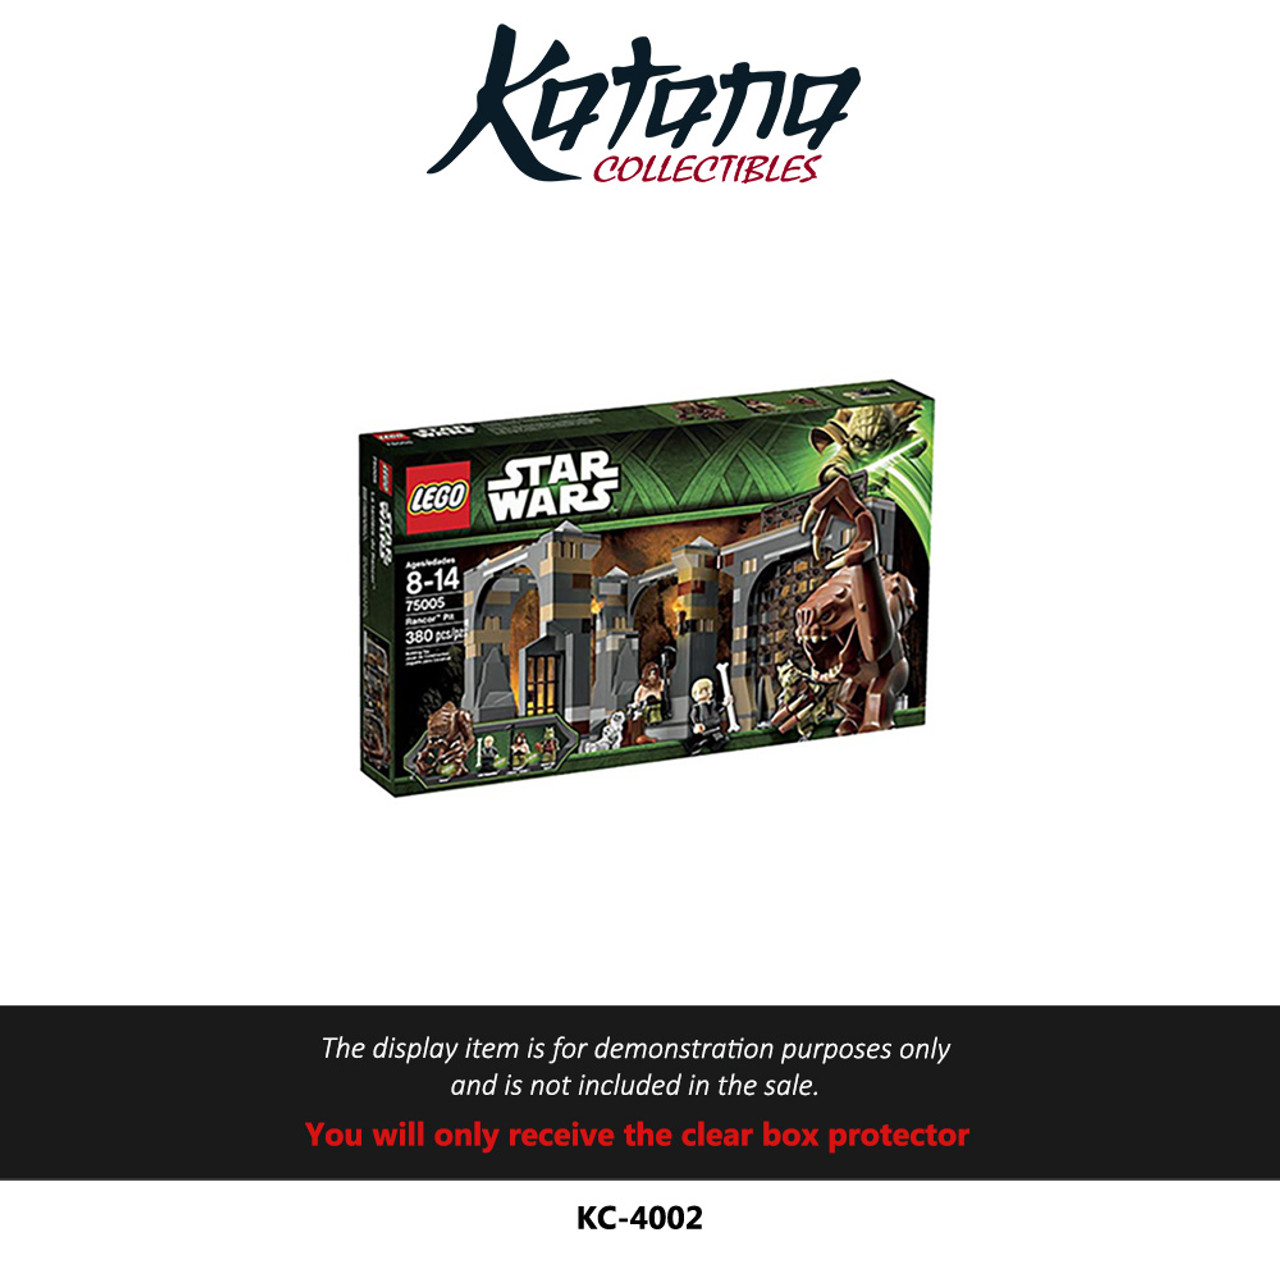 Katana Collectibles Protector For LEGO Star Wars Rancor Pit (75006)